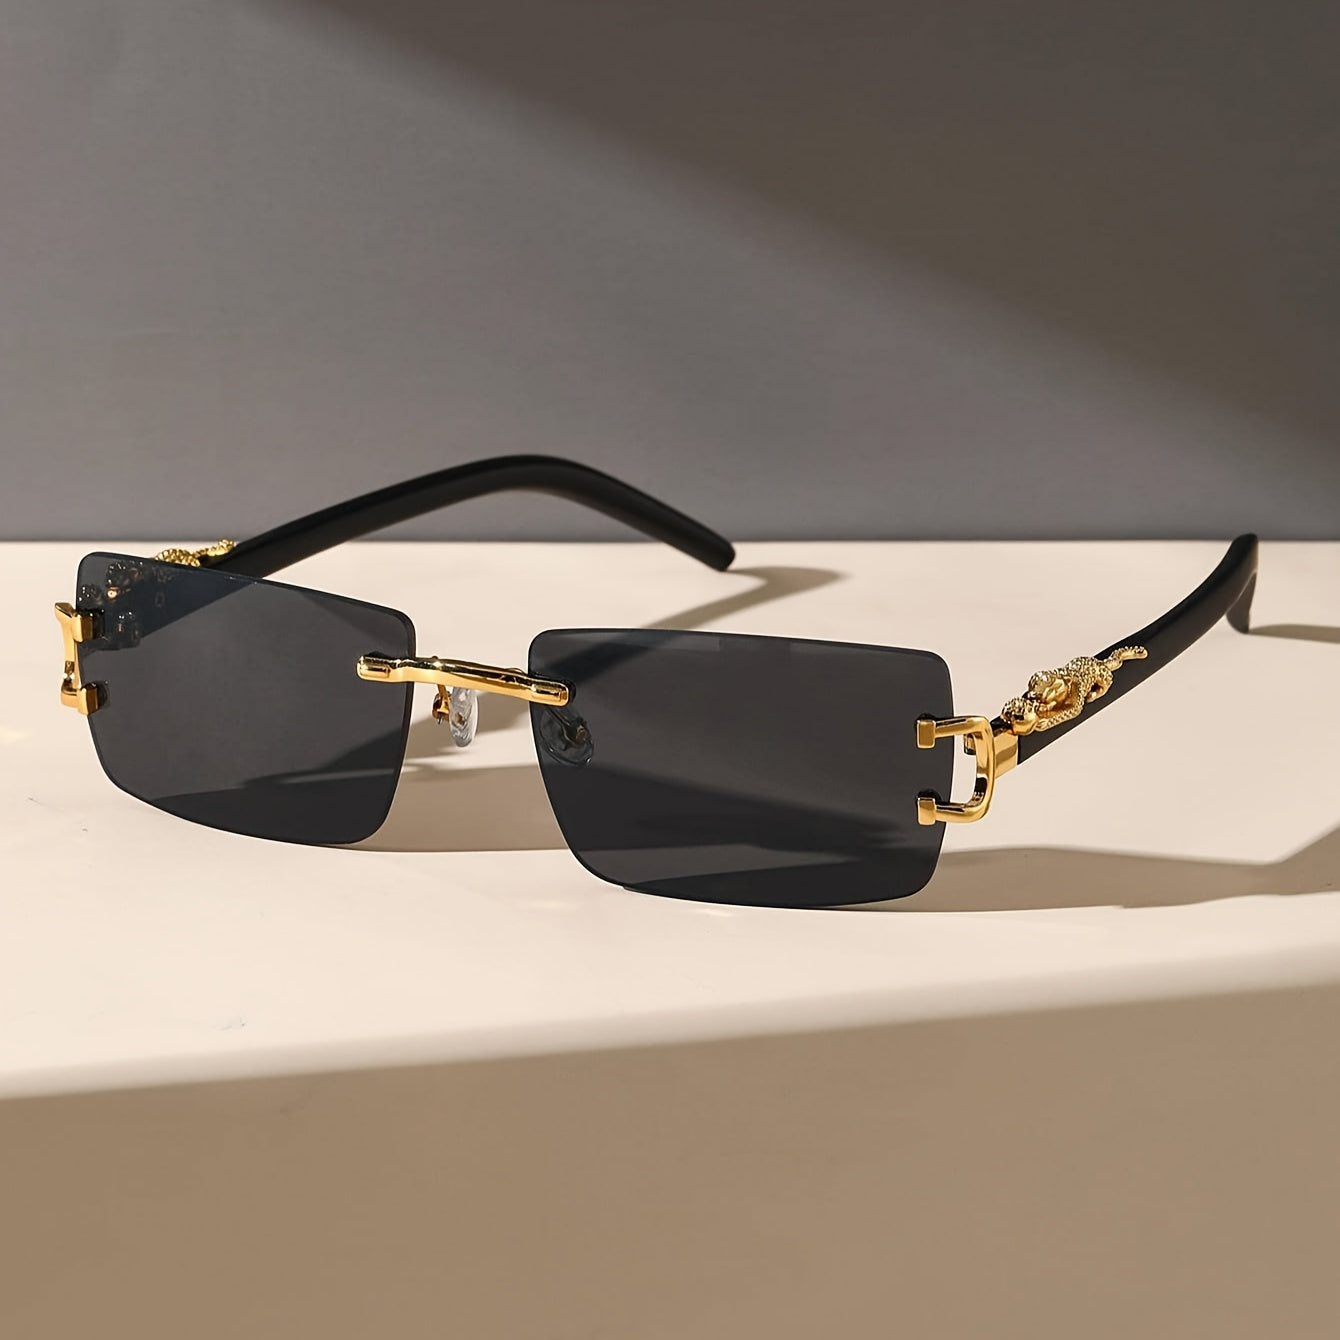 Vintage Leopard Metal Sunglasses - Randless Square Design